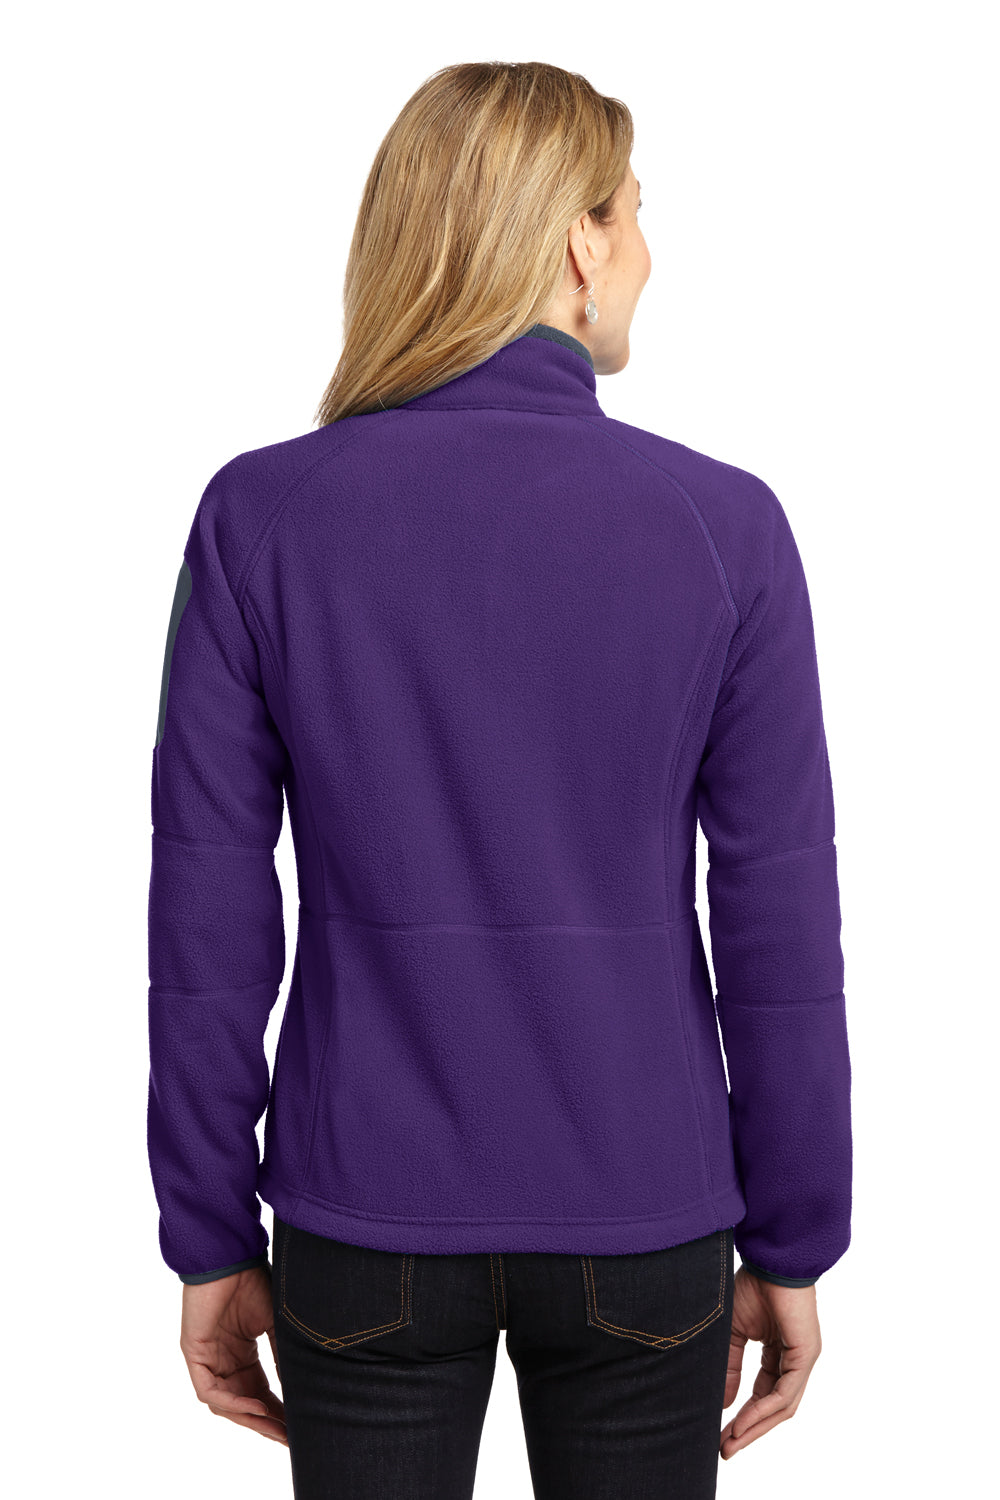 Port Authority L229 Womens Full Zip Fleece Jacket Purple/Grey Back